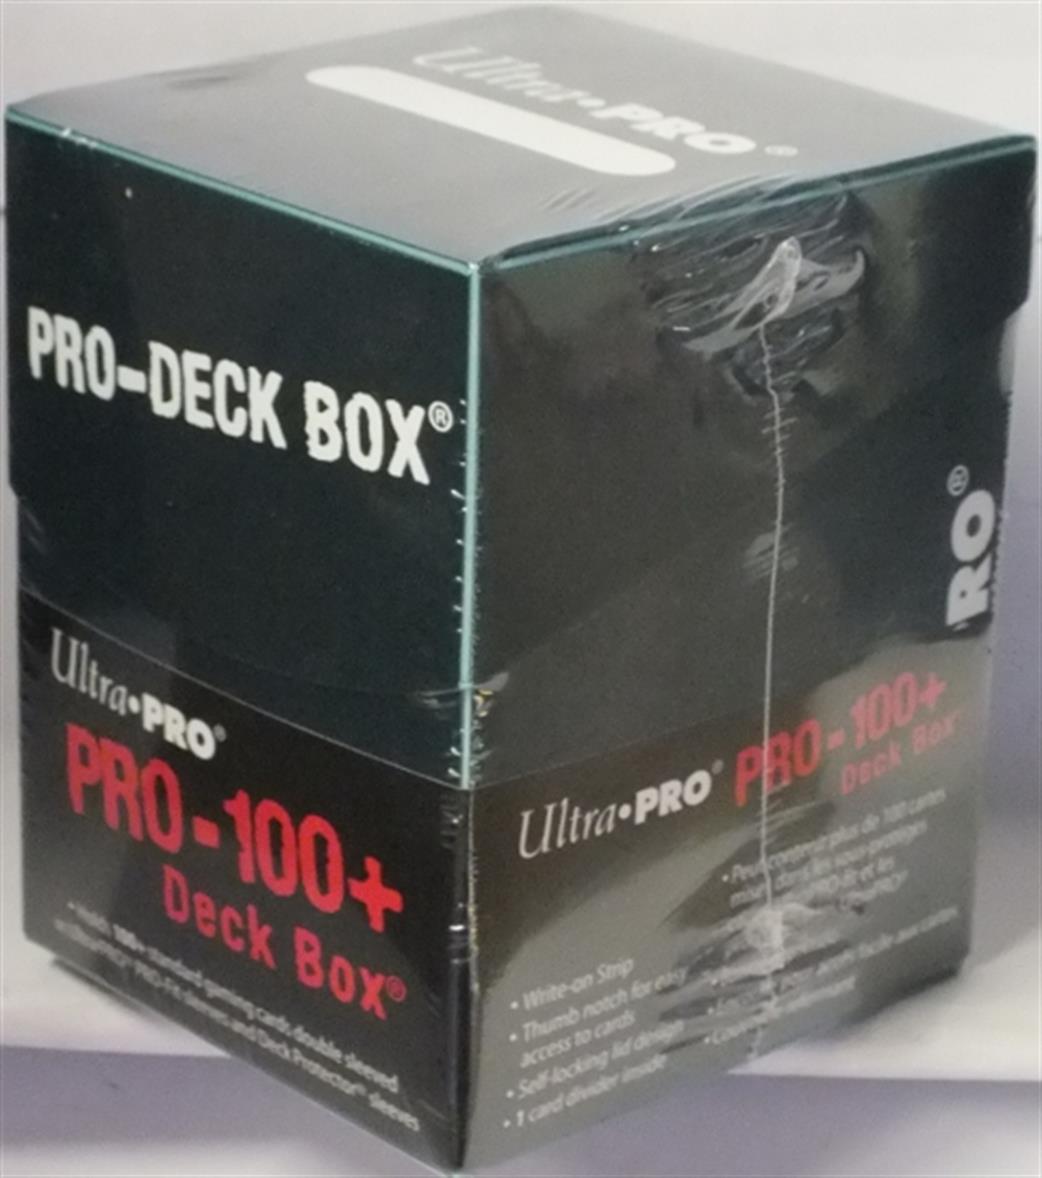 Ultra Pro 82888 PRO 100+ Green Deck Box